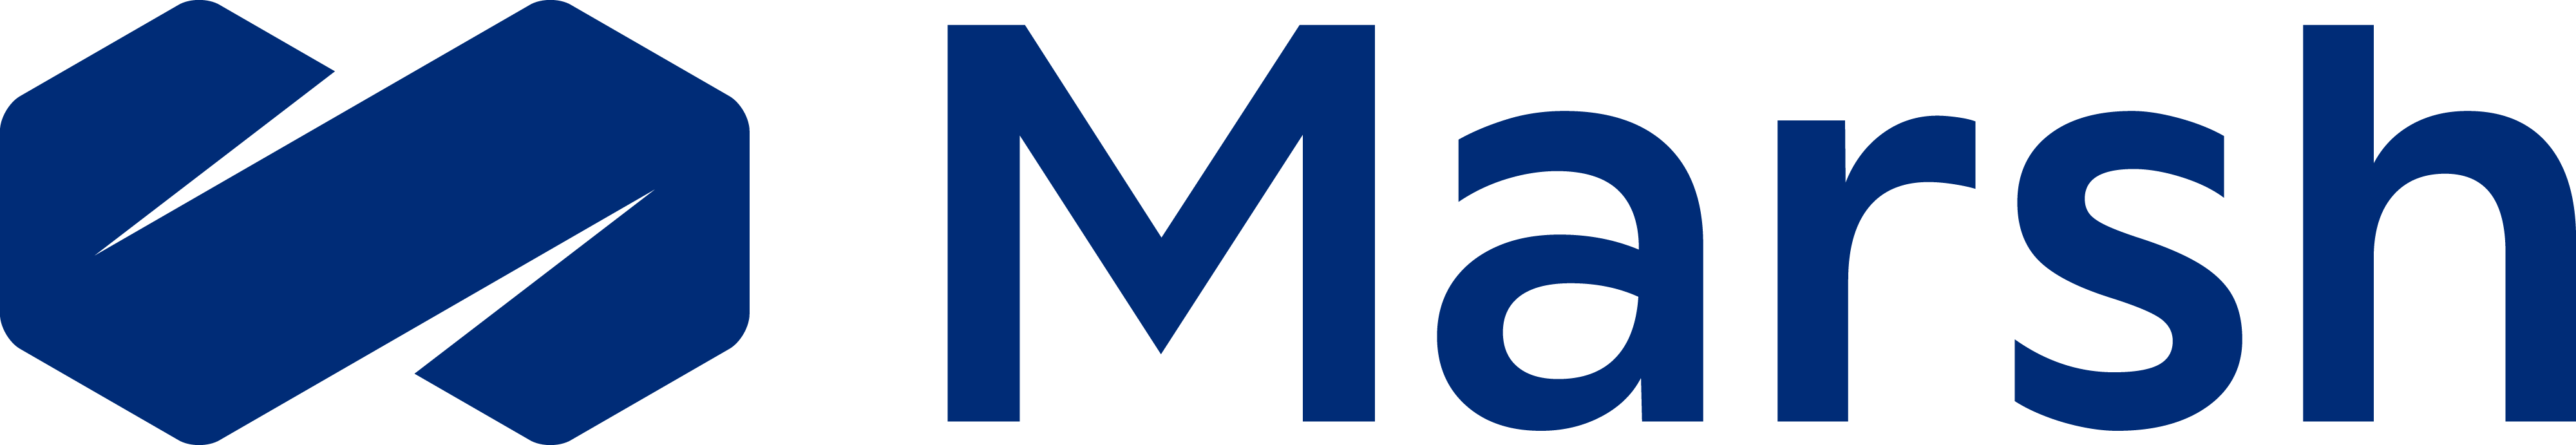 Marsh_h_rgb__Logo